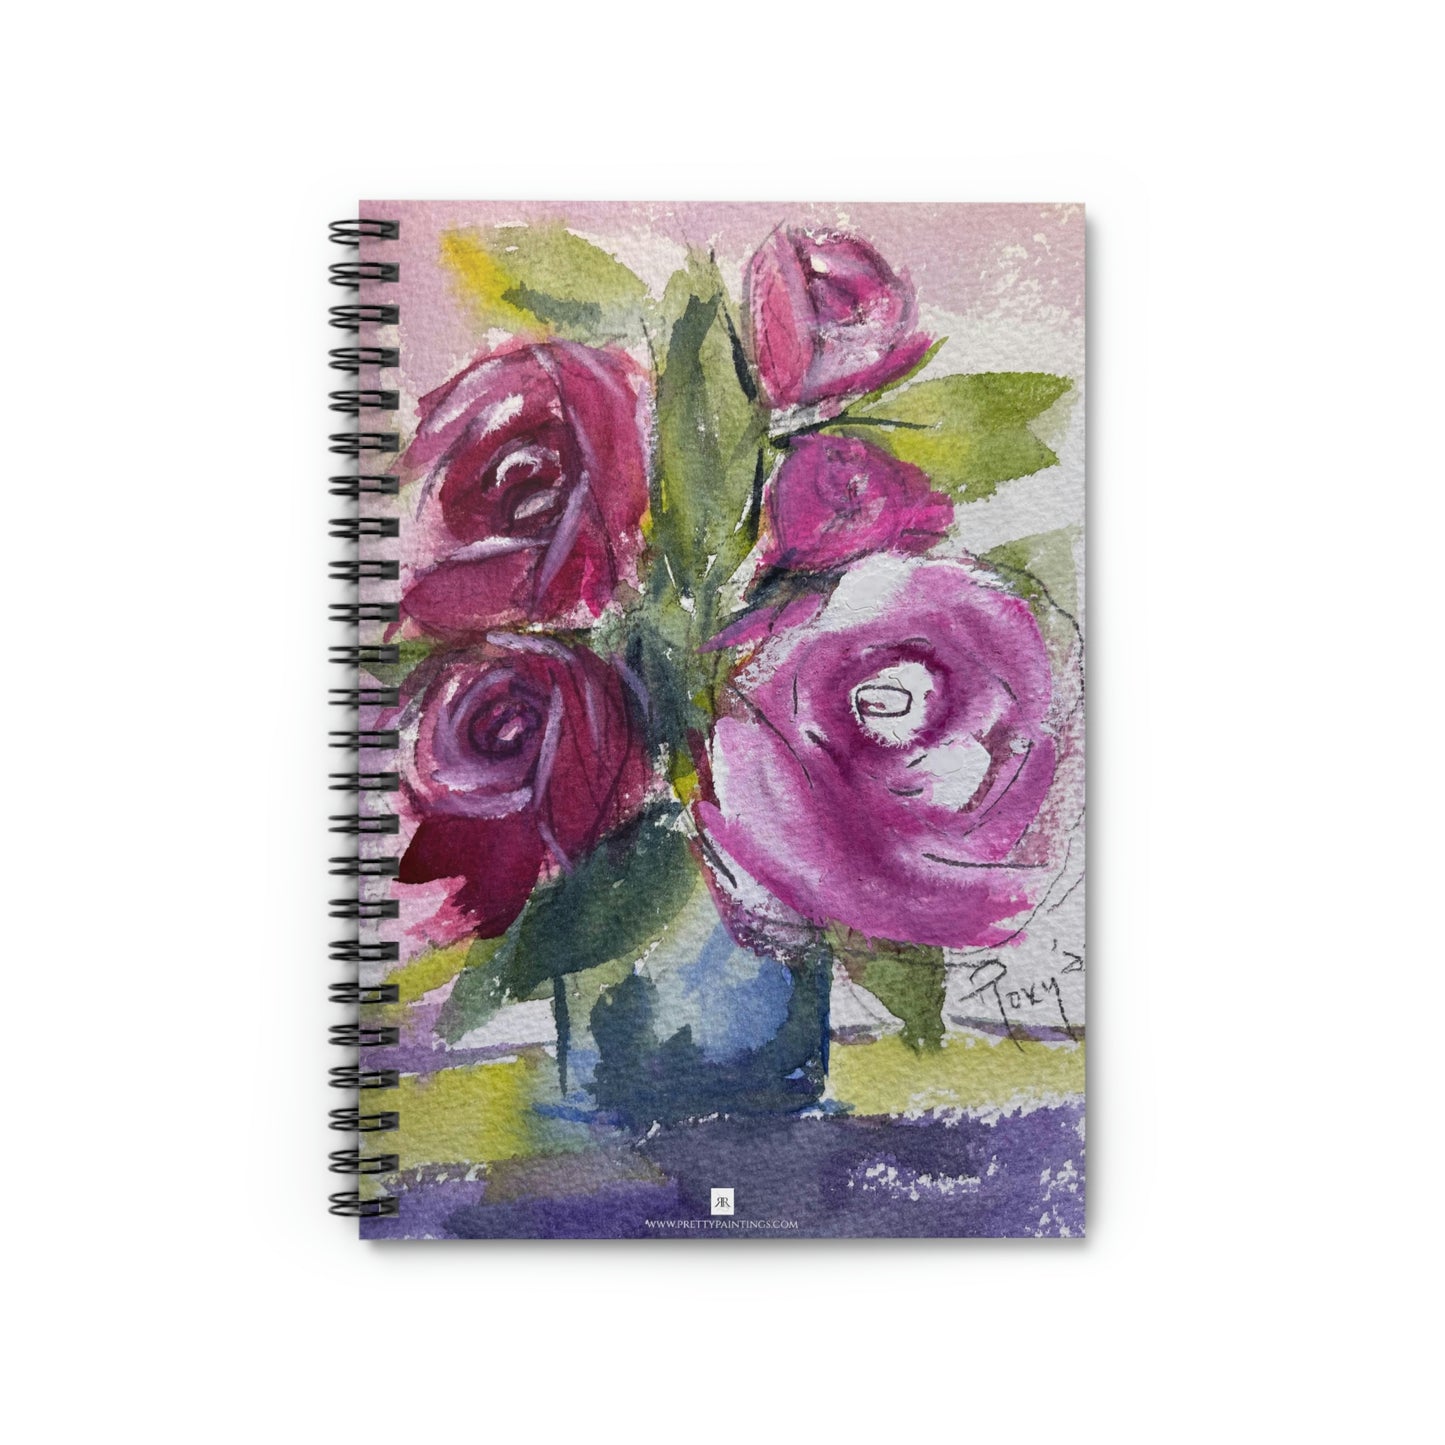 Roses in Surrey Spiral Notebook